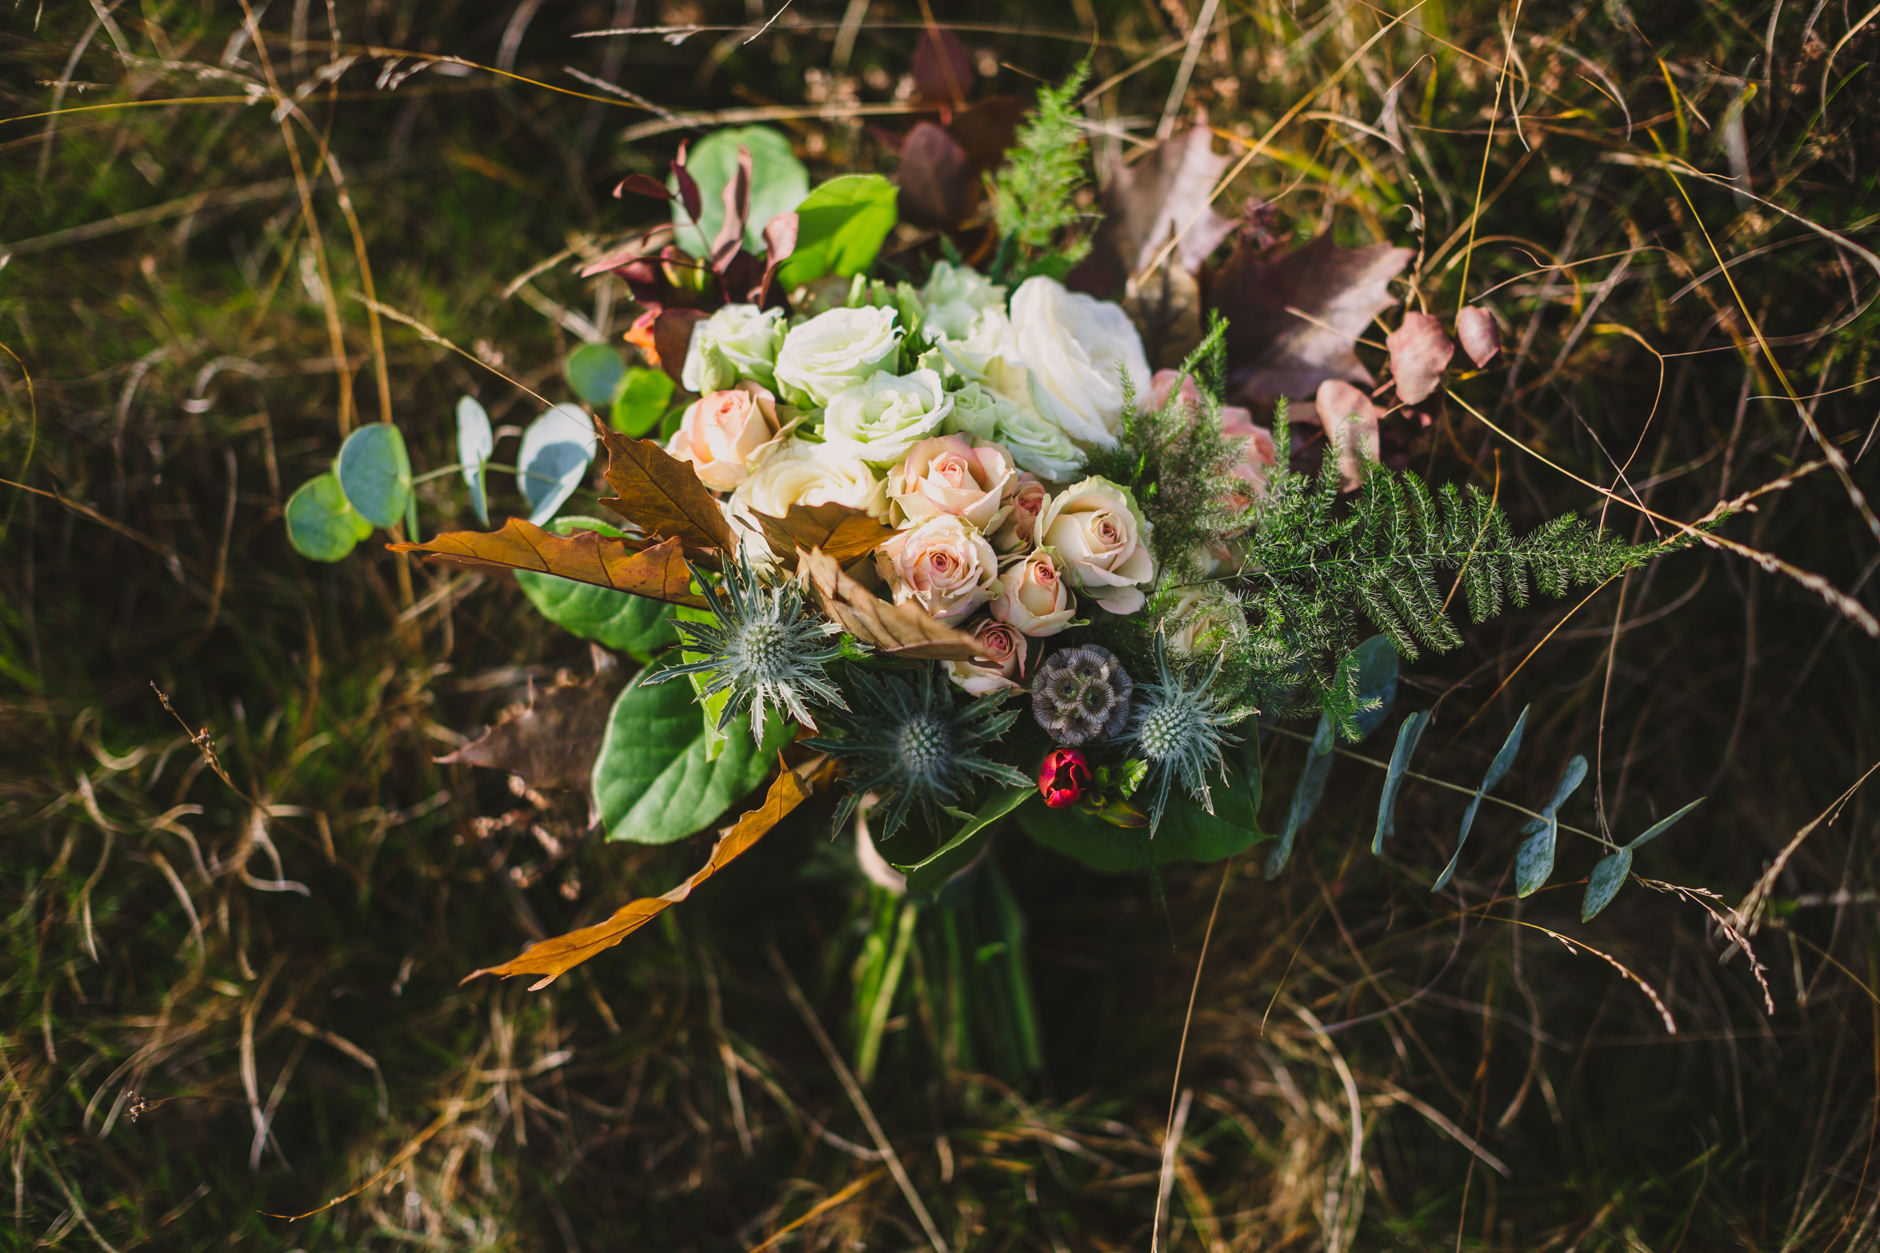 autumnal wedding bouquet from waitrose